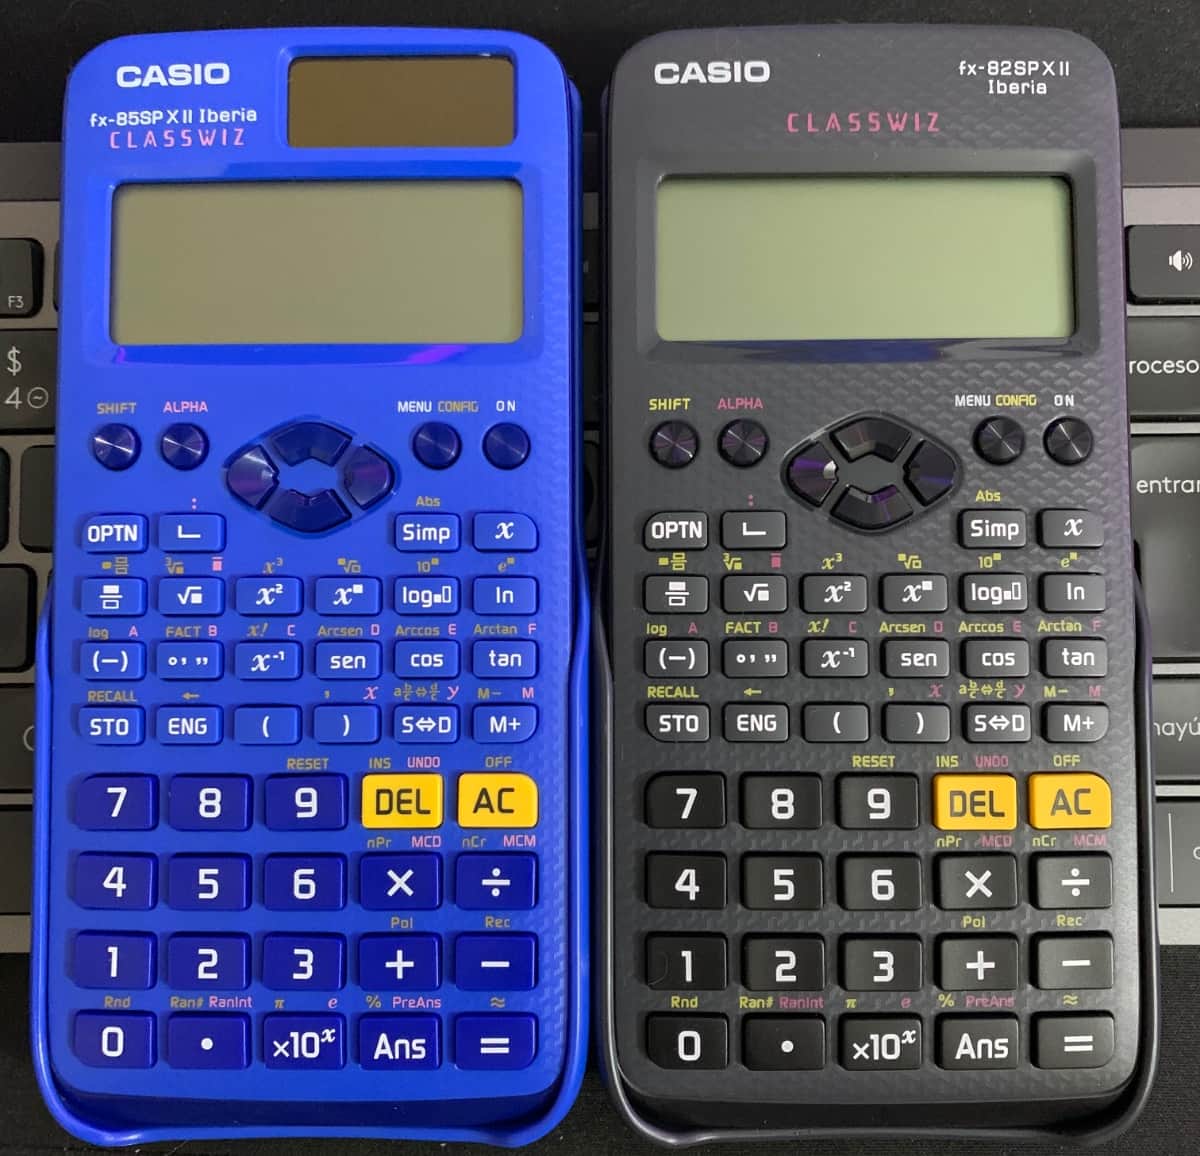 Calculadoras científicas de nivel básico: Casio fx-85 SP X II Iberia vs Casio fx-82 SP X II Iberia